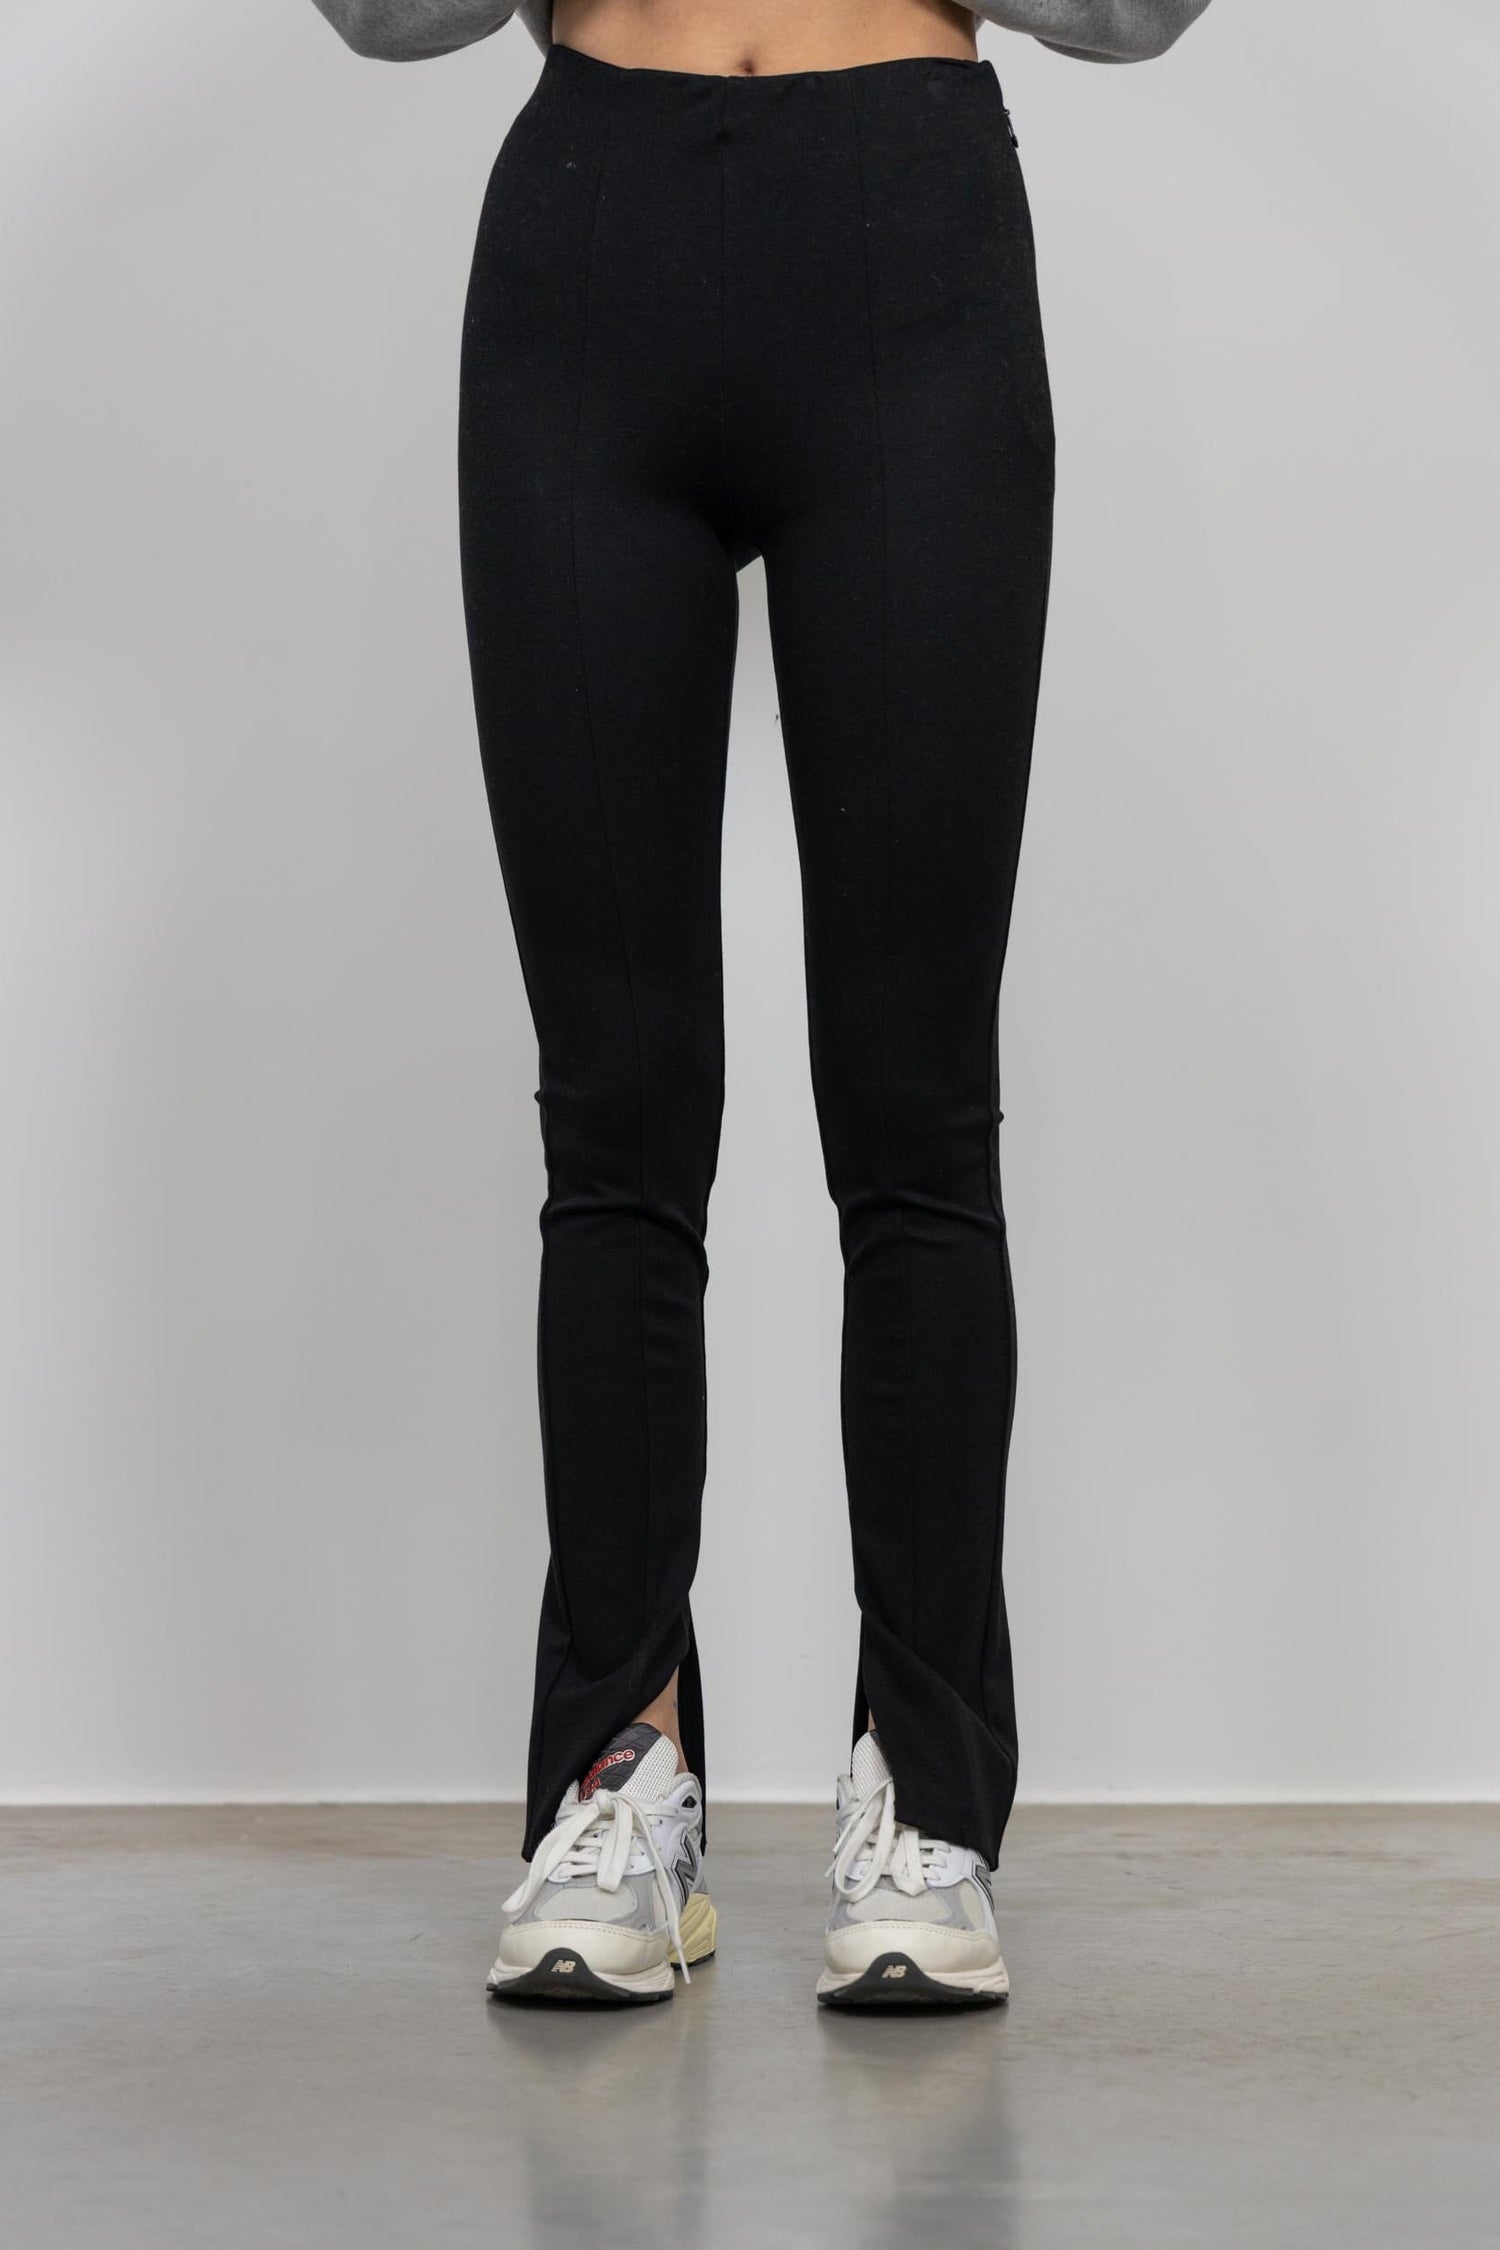 Max Studio Women's Ponte High Waist Skinng Legging, Black/Char Textured  Pinstripe-Sjt-K676-4, Large at Amazon Women's Clothing store